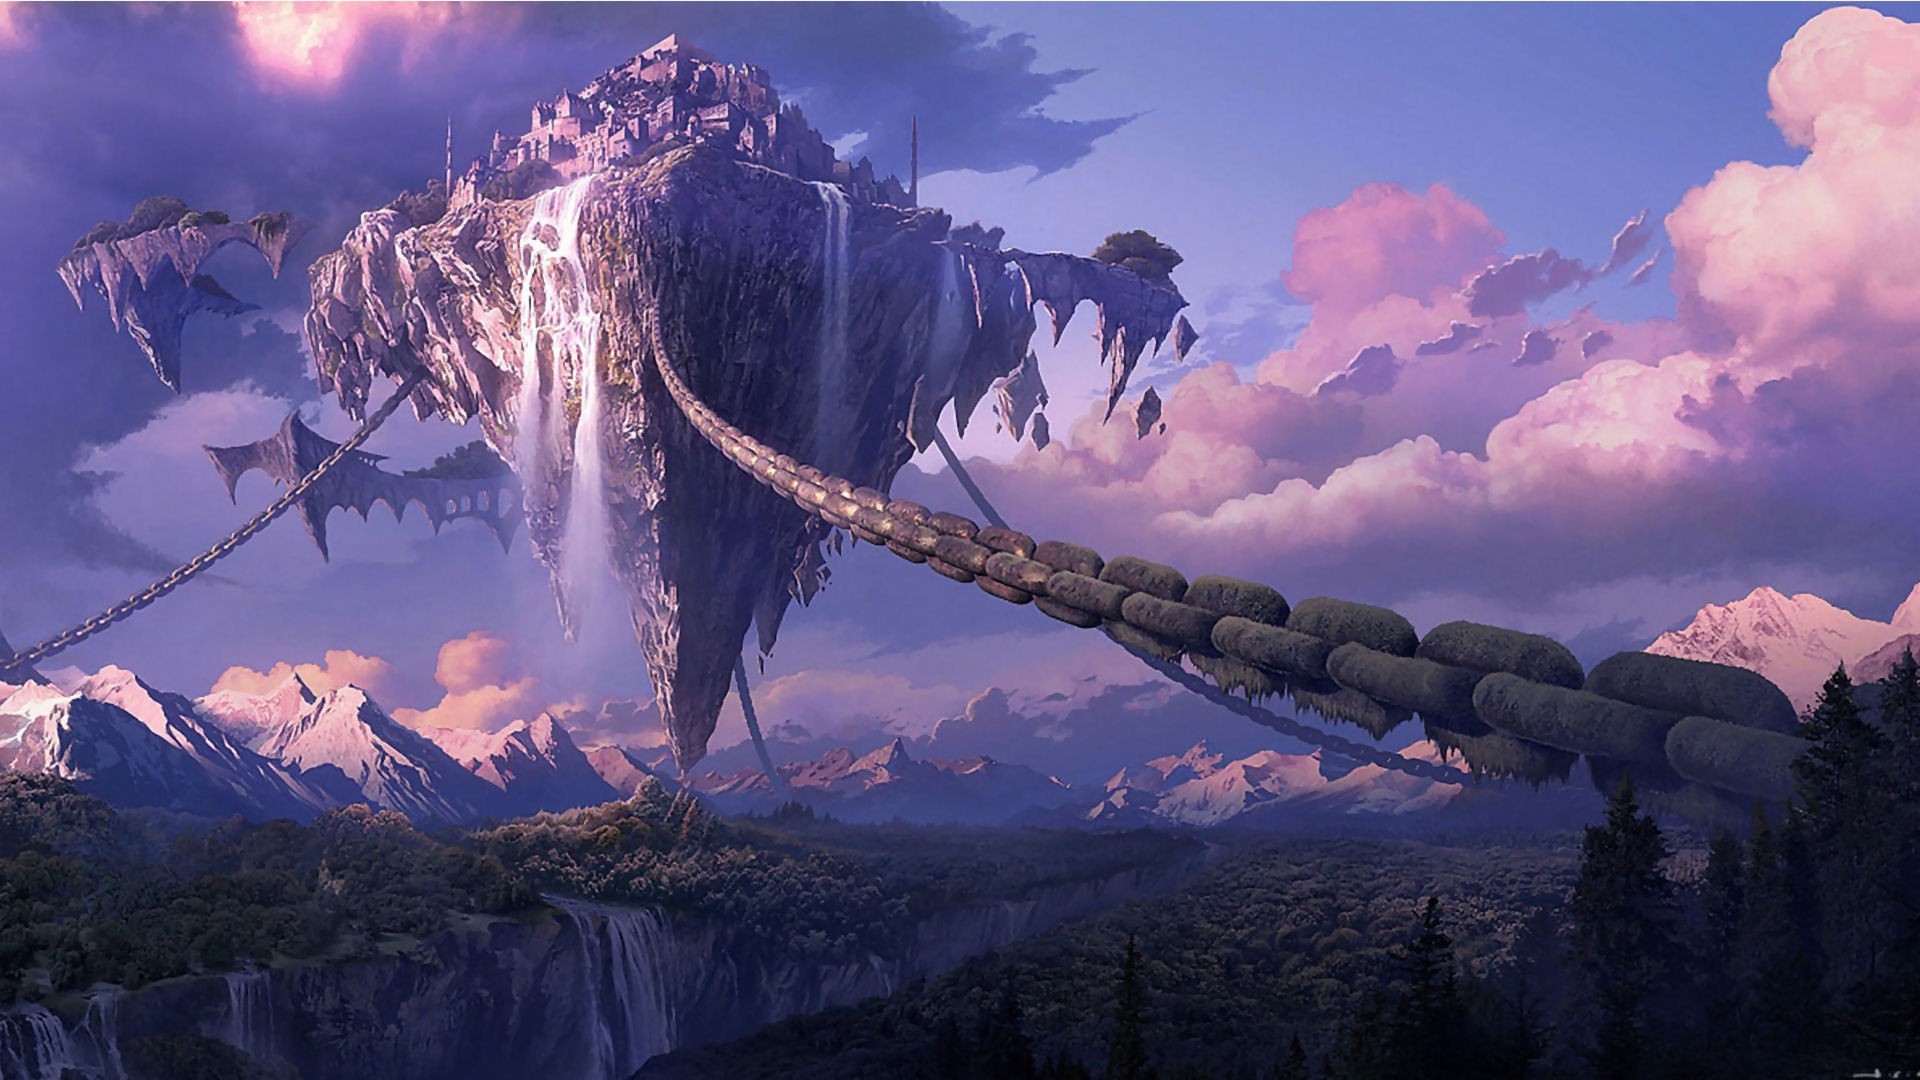 X chains landscape tera online digital art anime waterfall fantasy art forest mountain floating island wallpaper jpg kb